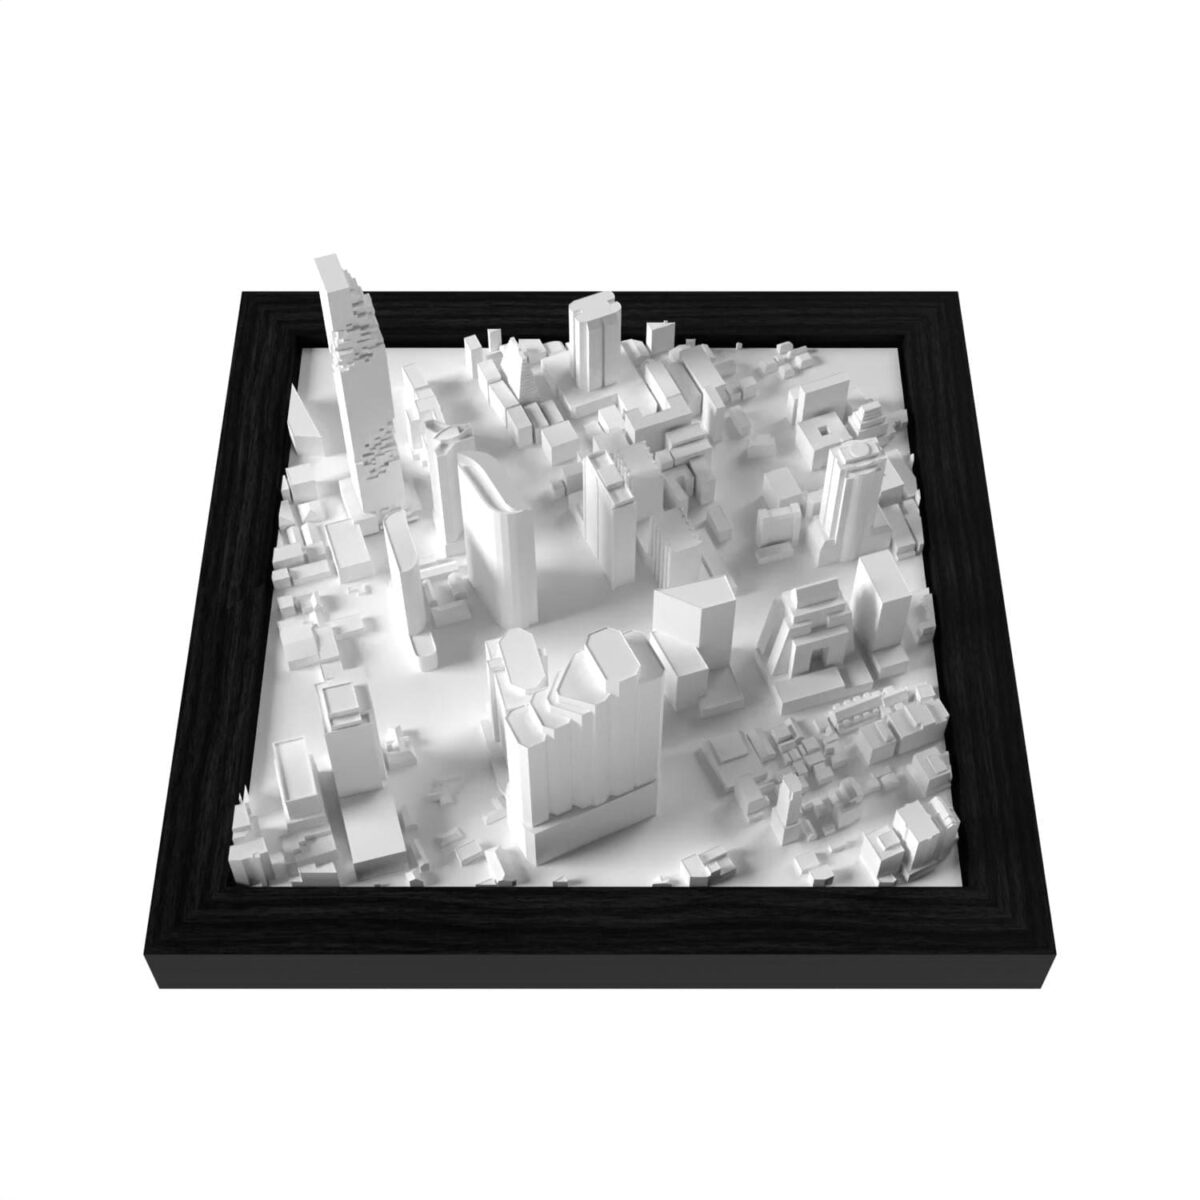 Daedalus Designs - Cityframes Bangkok 3D City Map Sculpture - Review